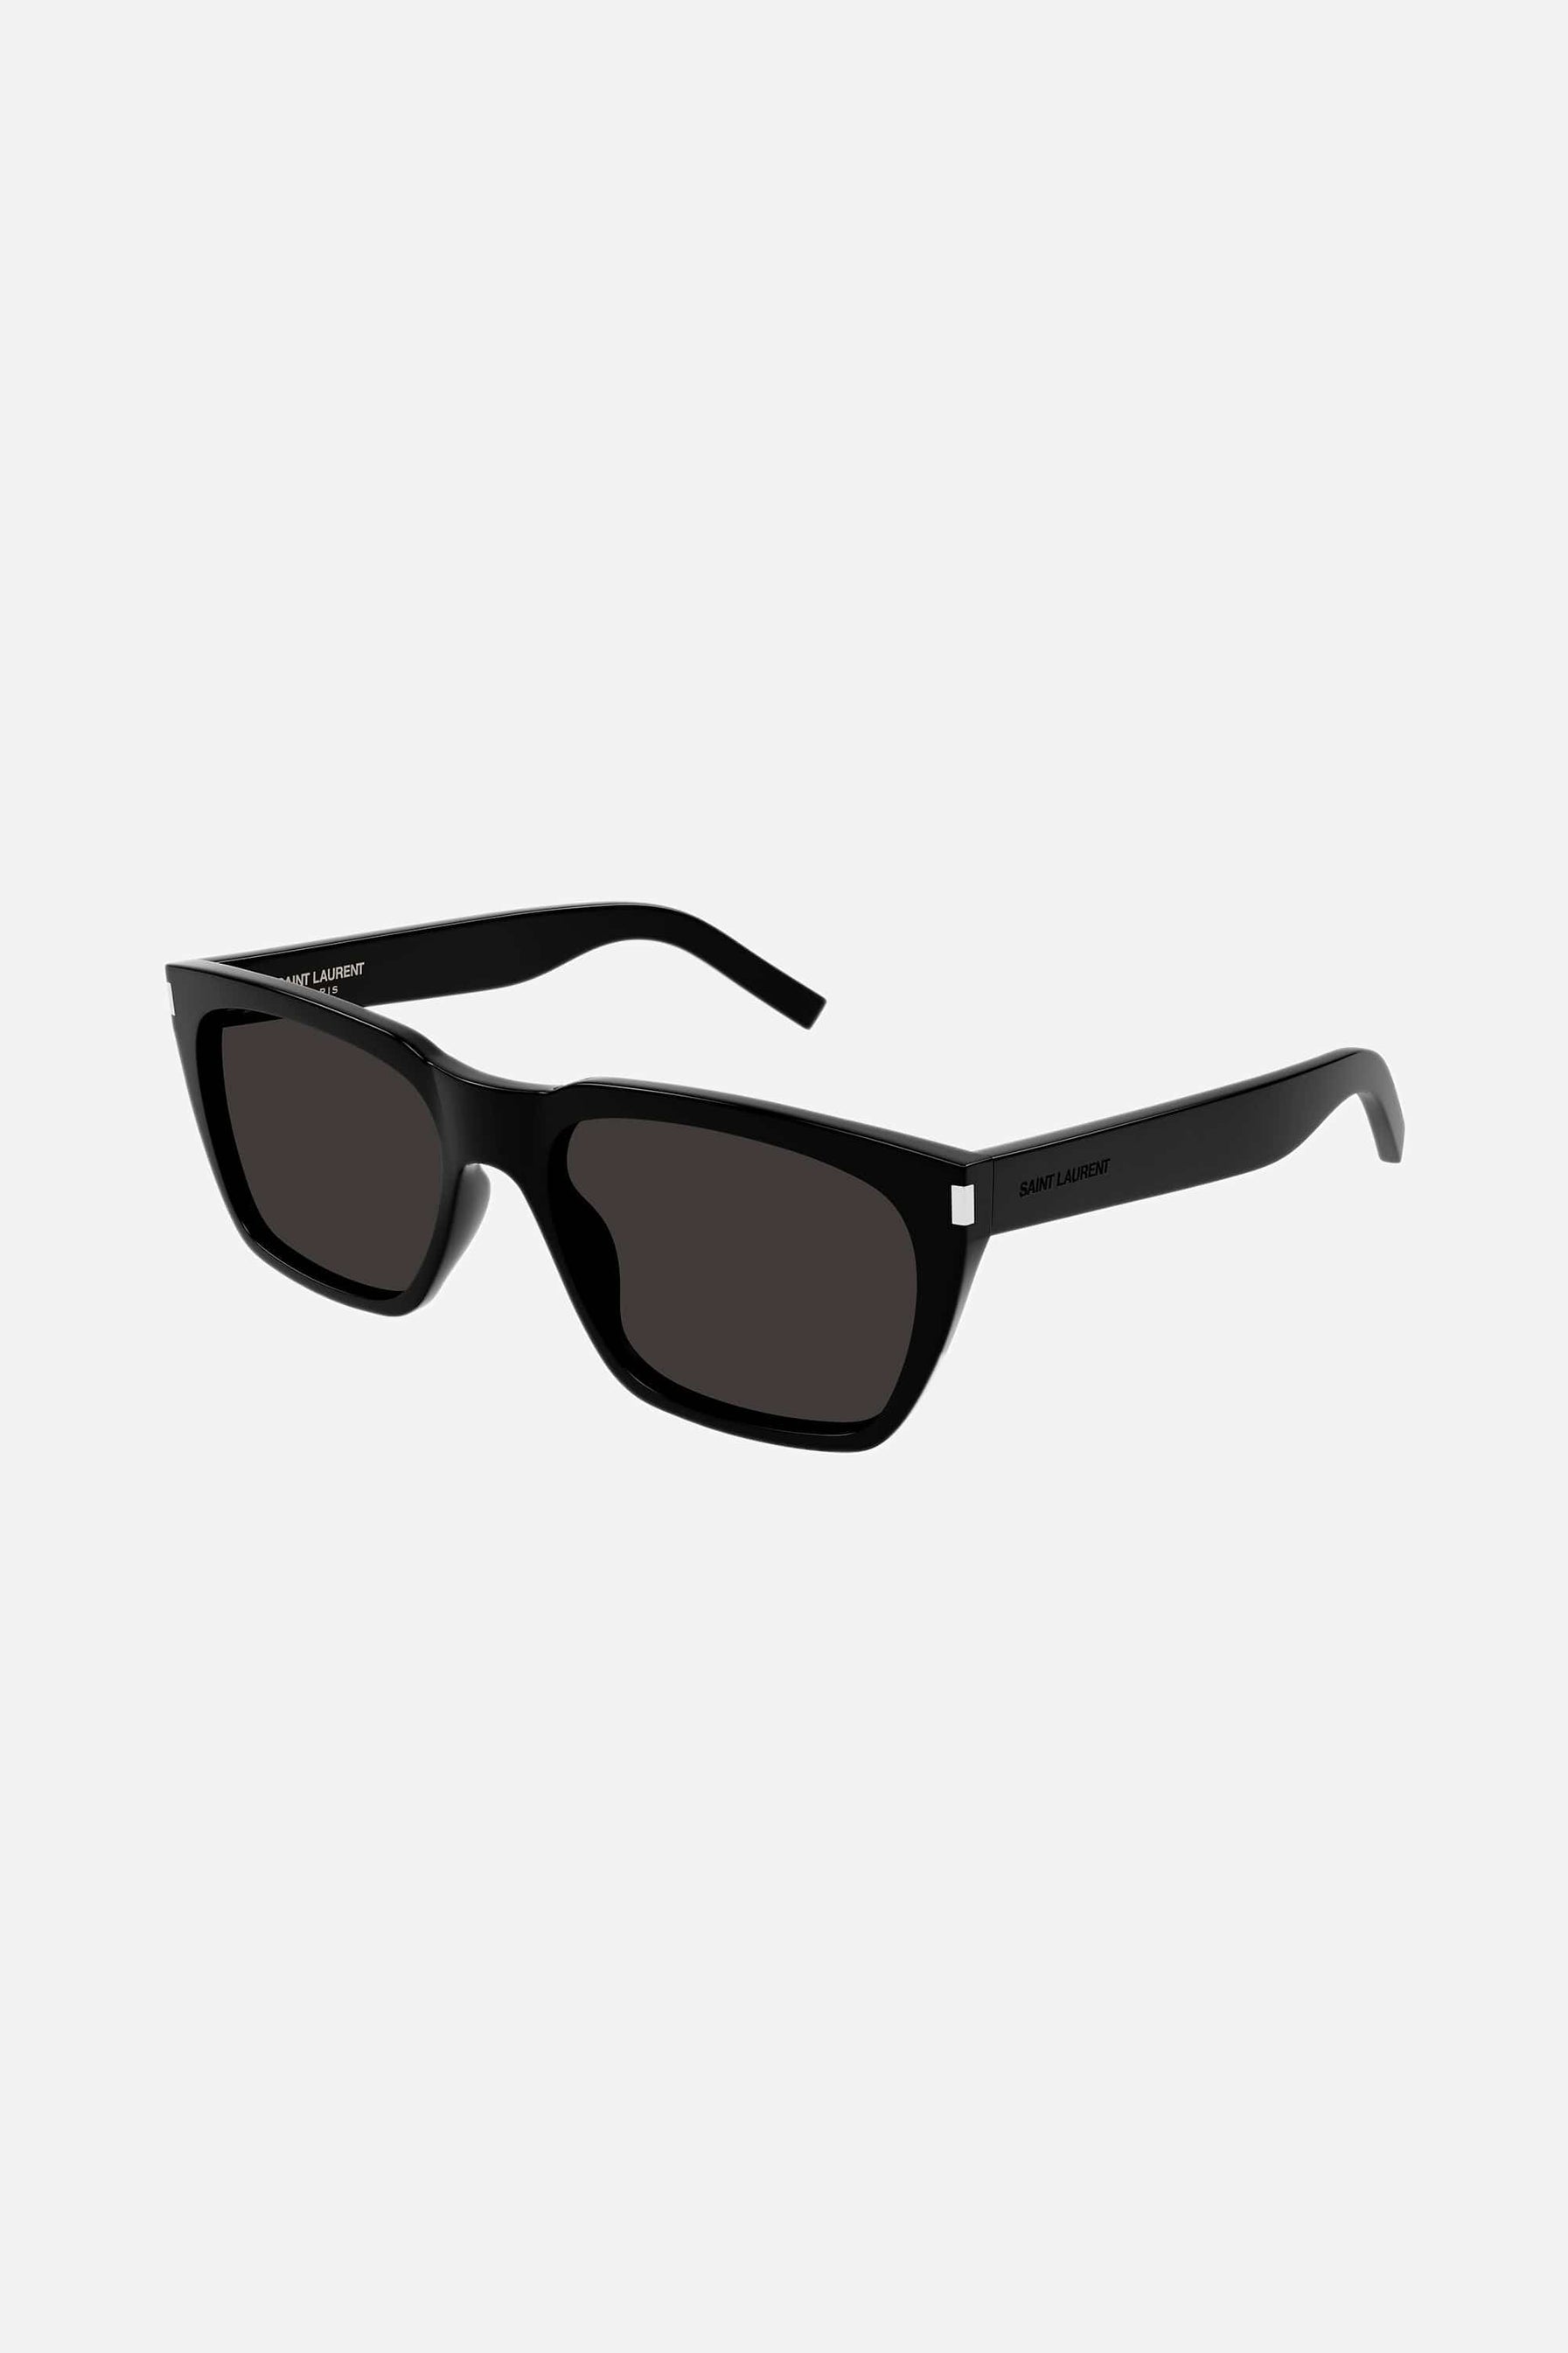 Saint Laurent oversized rectangular black sunglasses - Eyewear Club